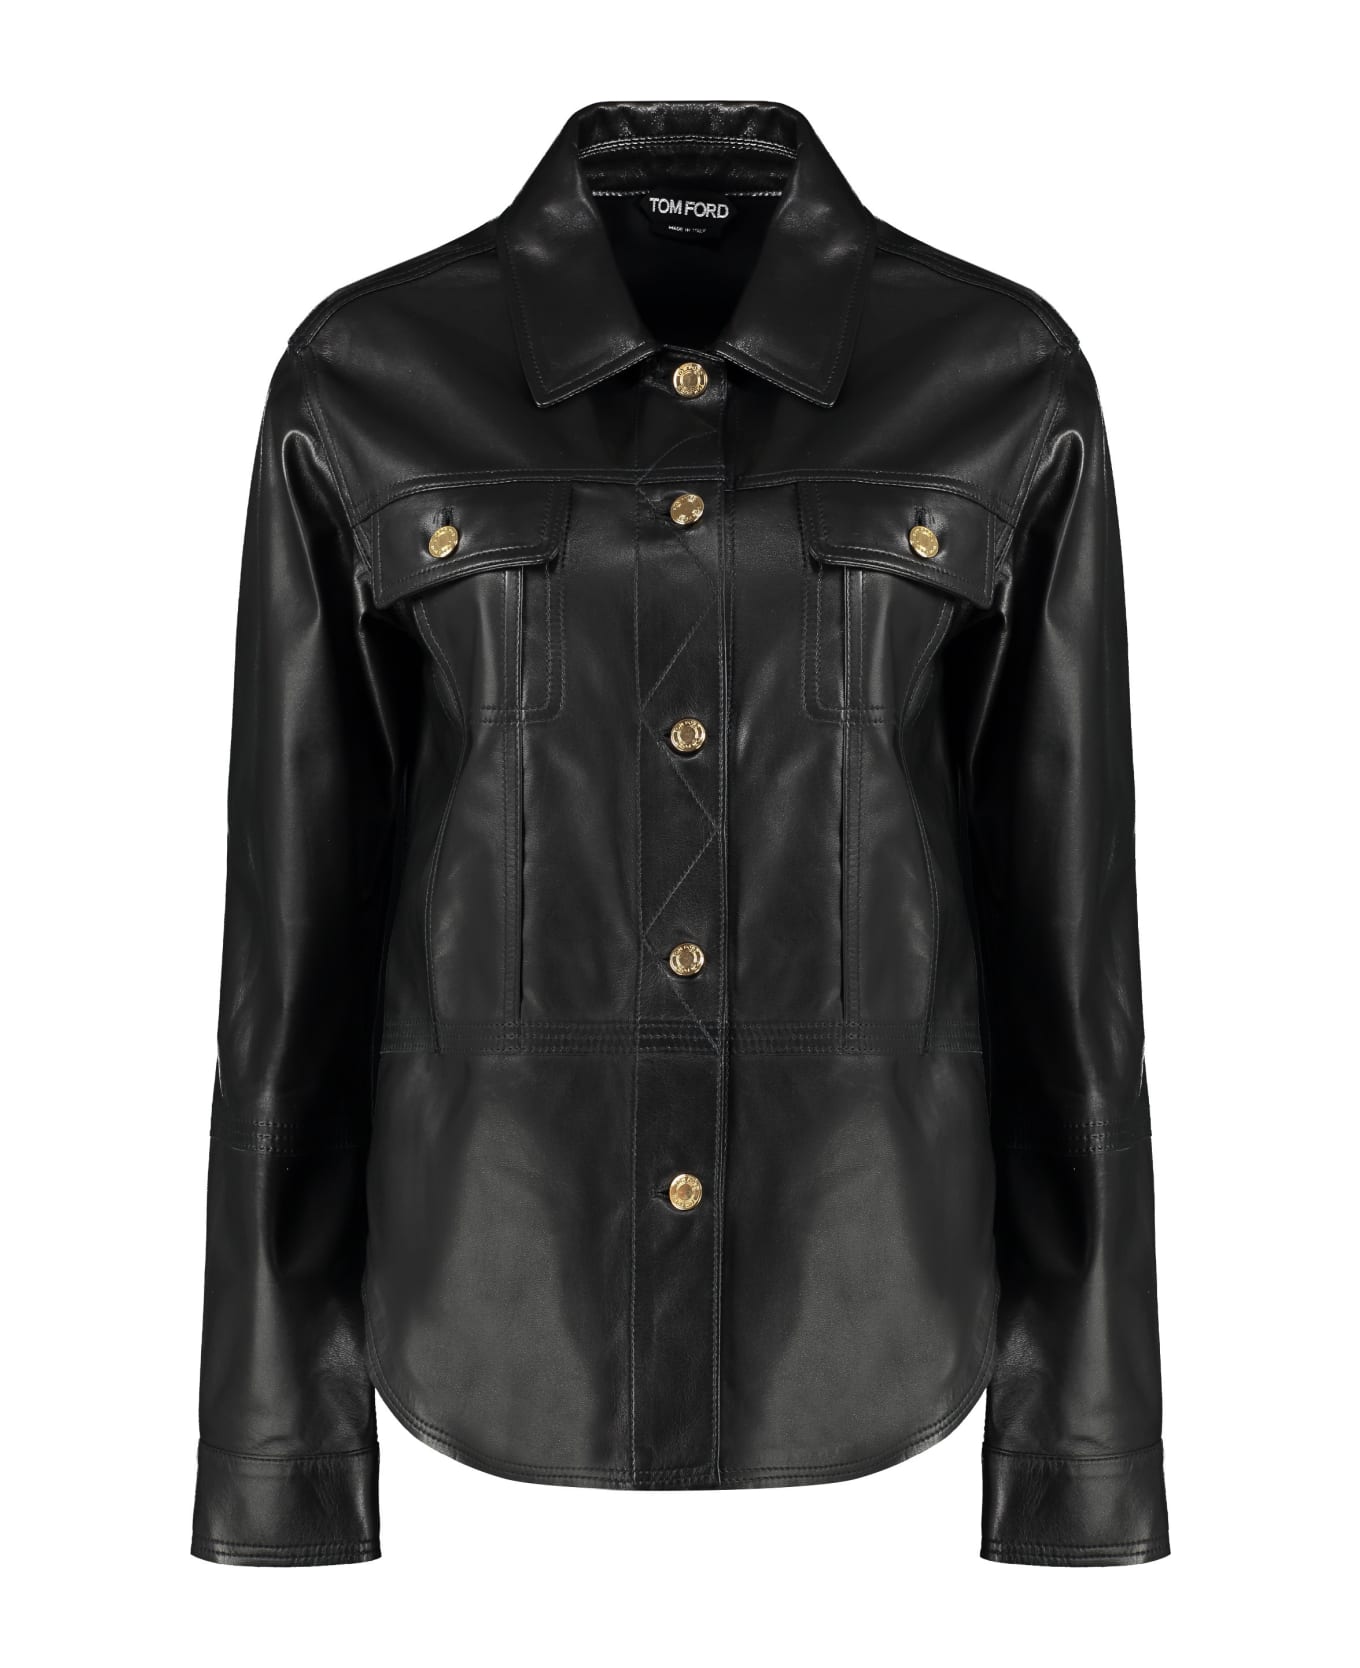 Tom Ford Leather Overshirt - black